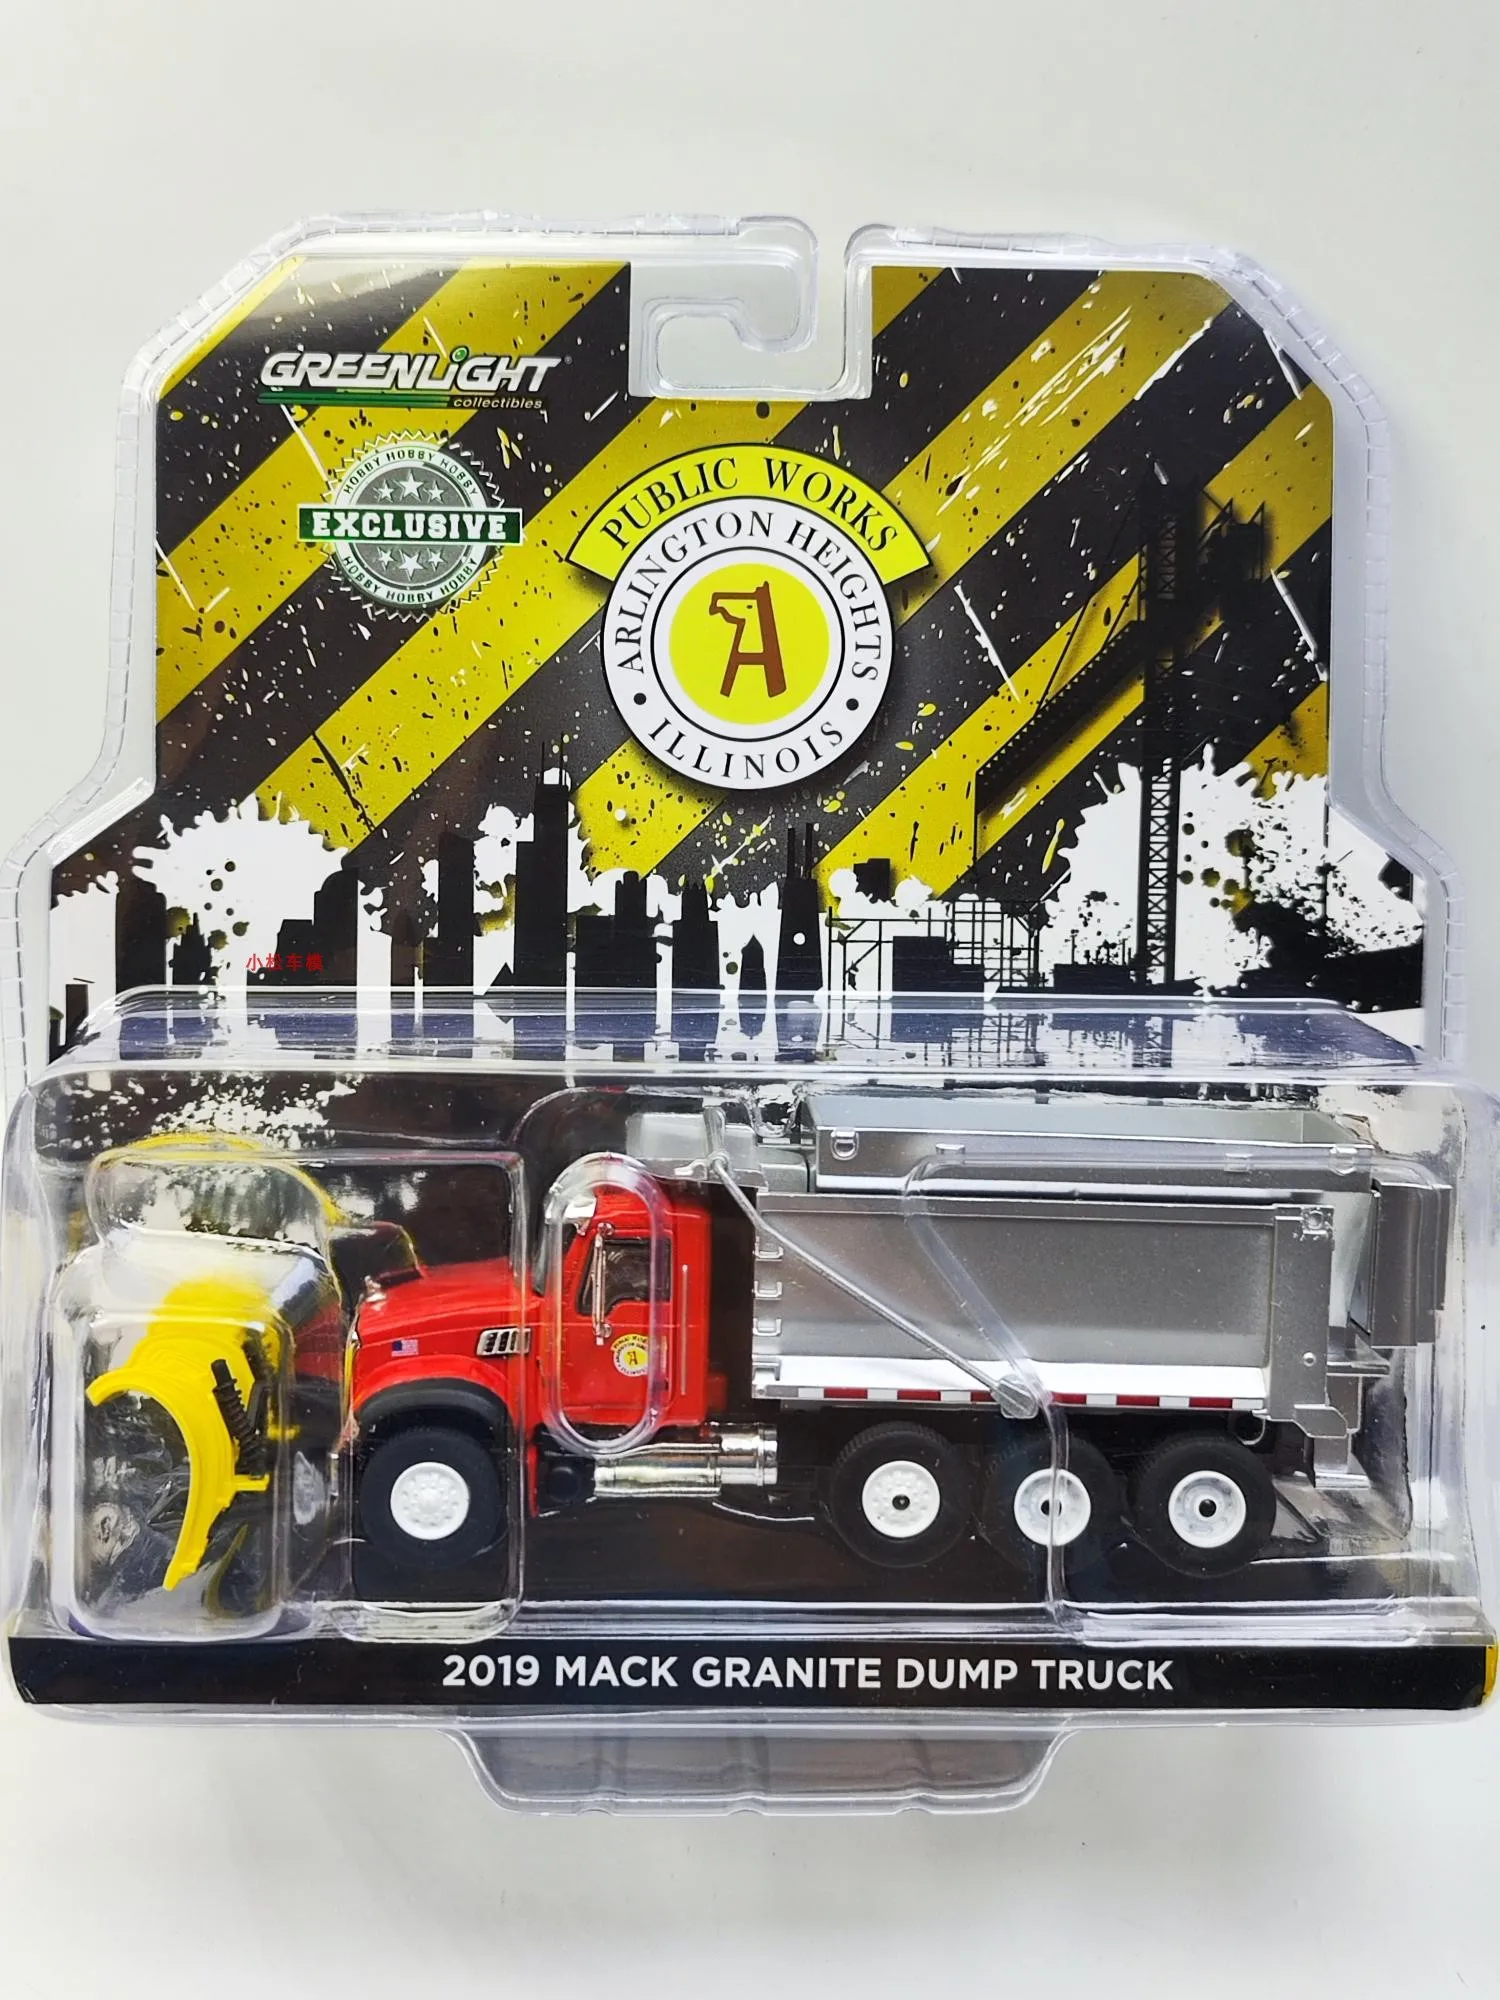 

1/64 Scale Diecast Car Model Toys 2019 M-ack Granite Dump Truck GreenLight Die-Cast Metal Vehicle For Kids Boys Gift Friend